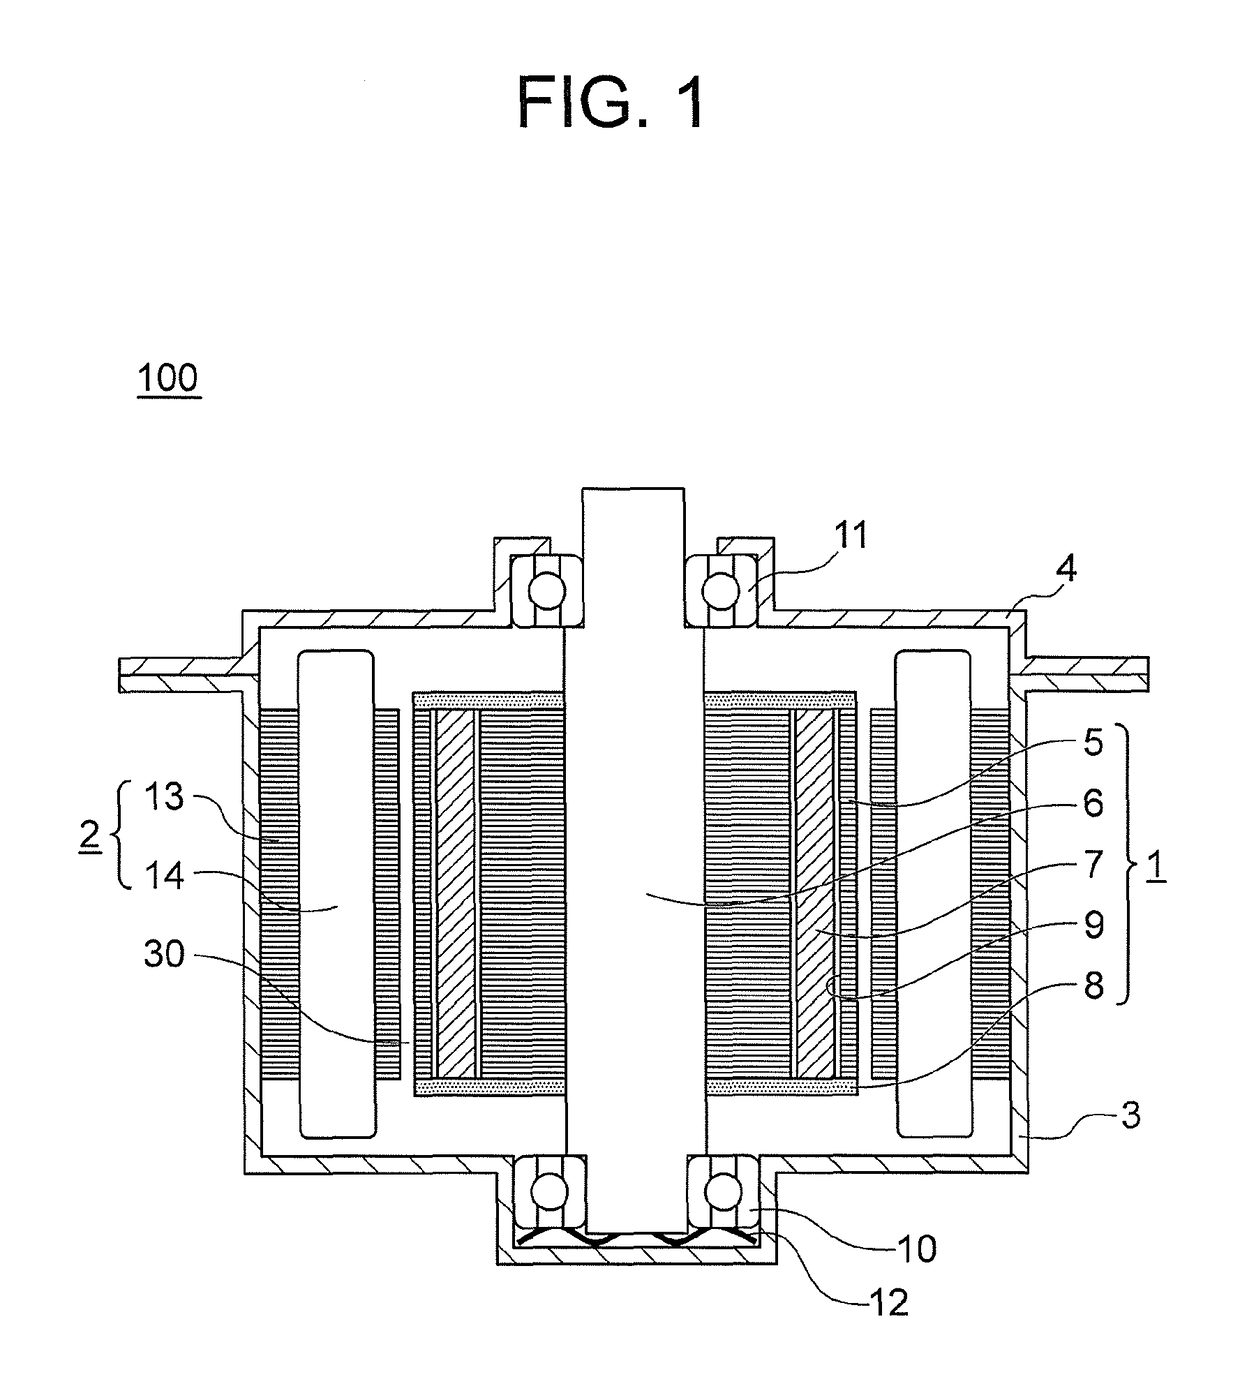 Interior permanent magnet motor